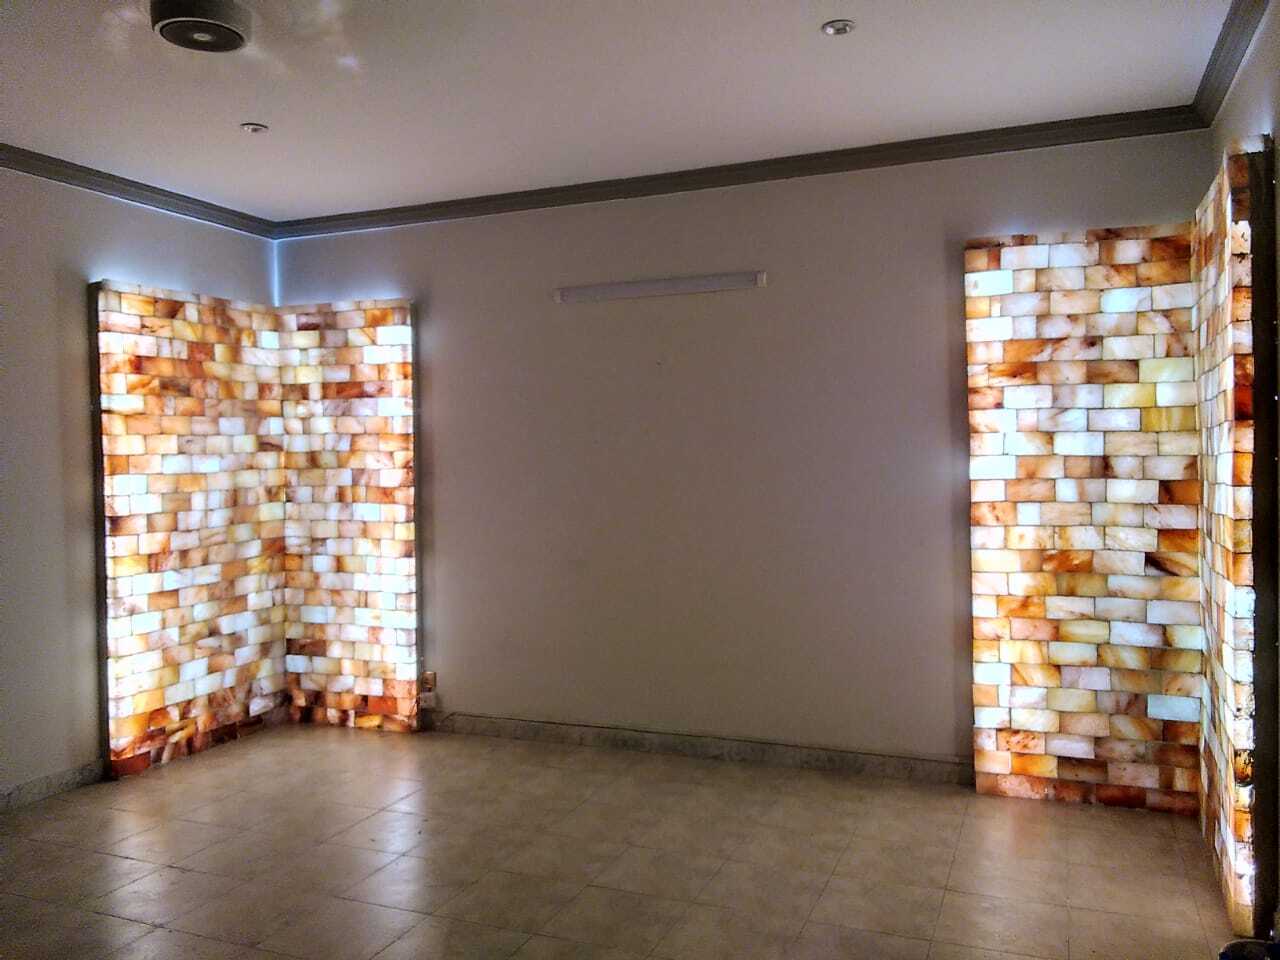 salt tiles